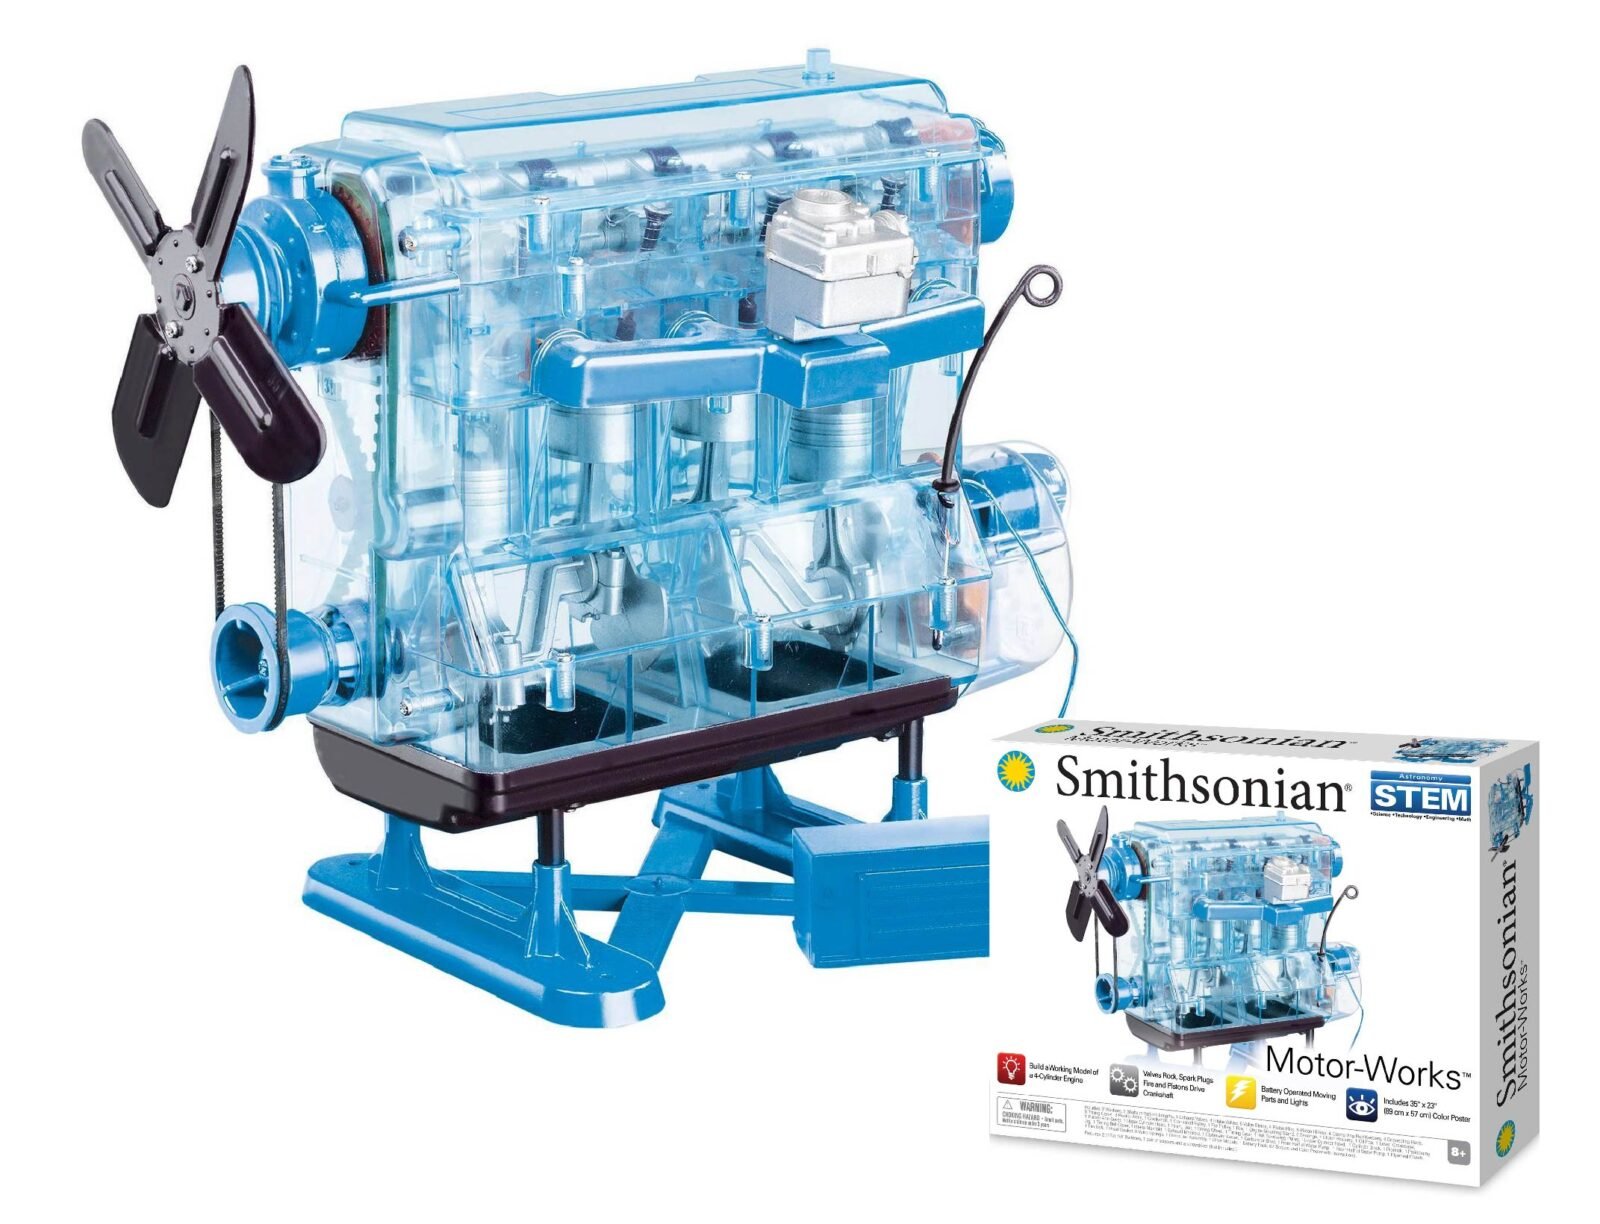 Smithsonian Motor-Works Engine Model